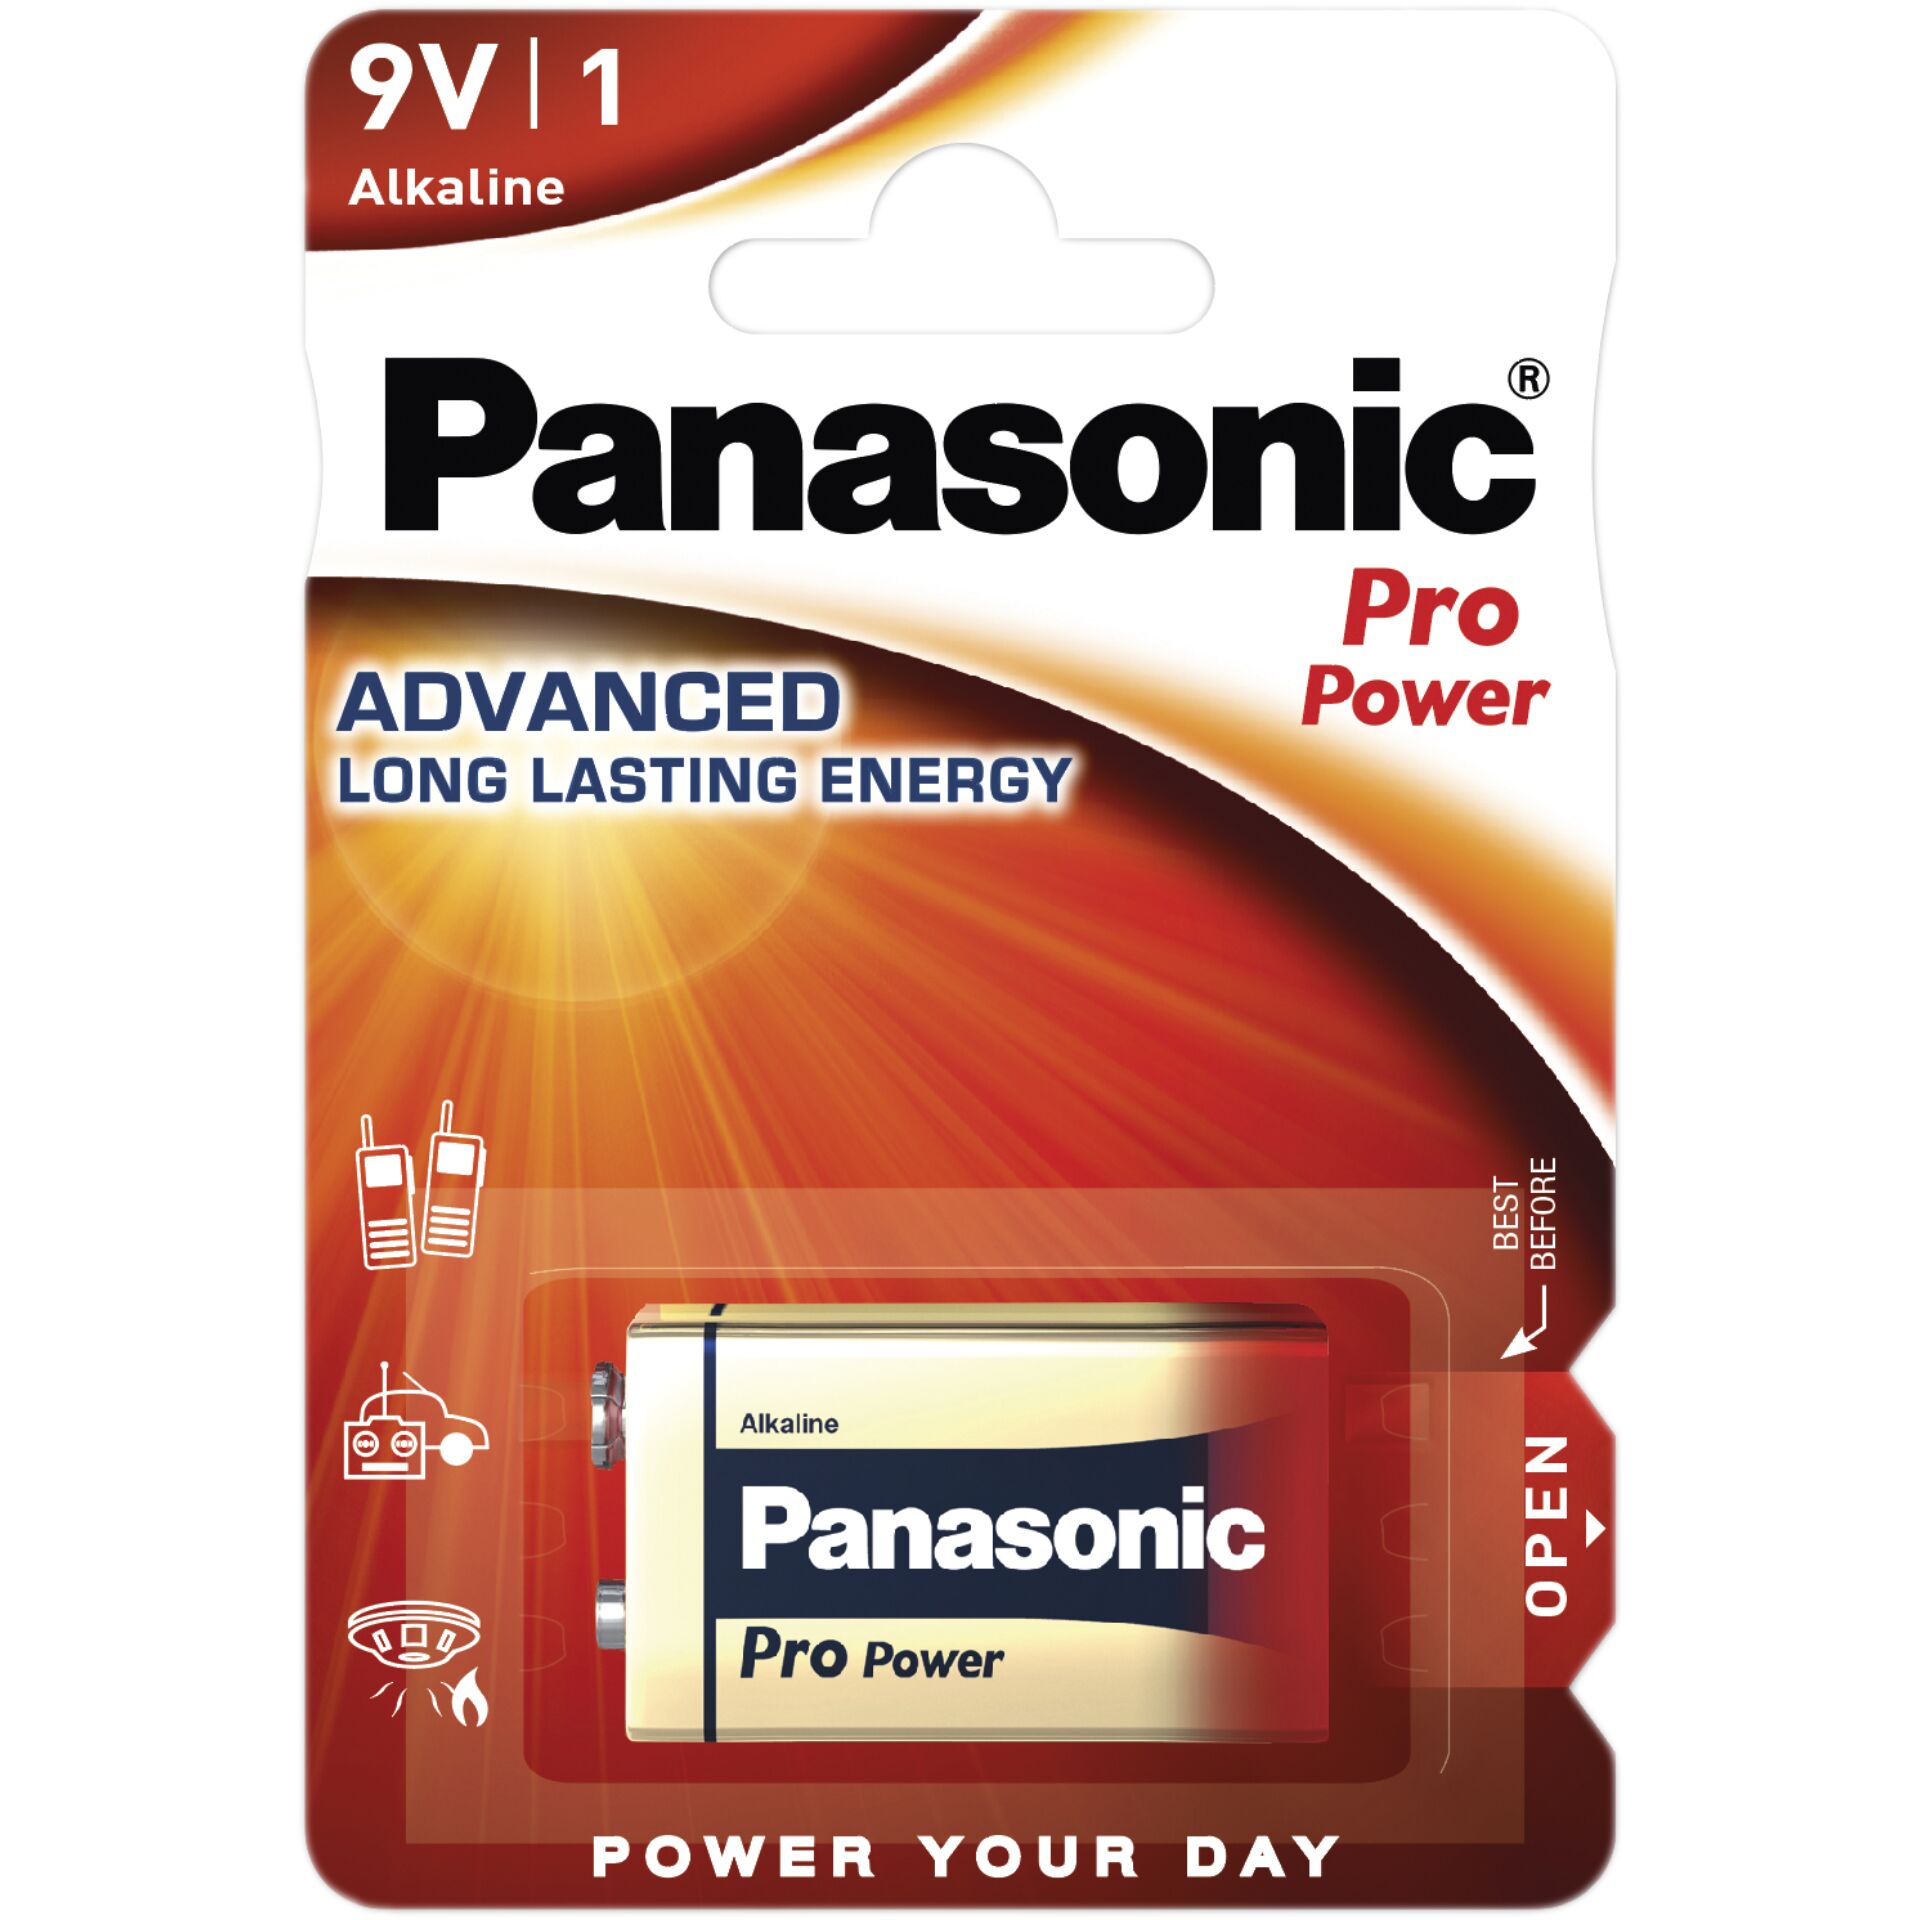 1 Panasonic Pro Power 6 LR 61 9V-Block